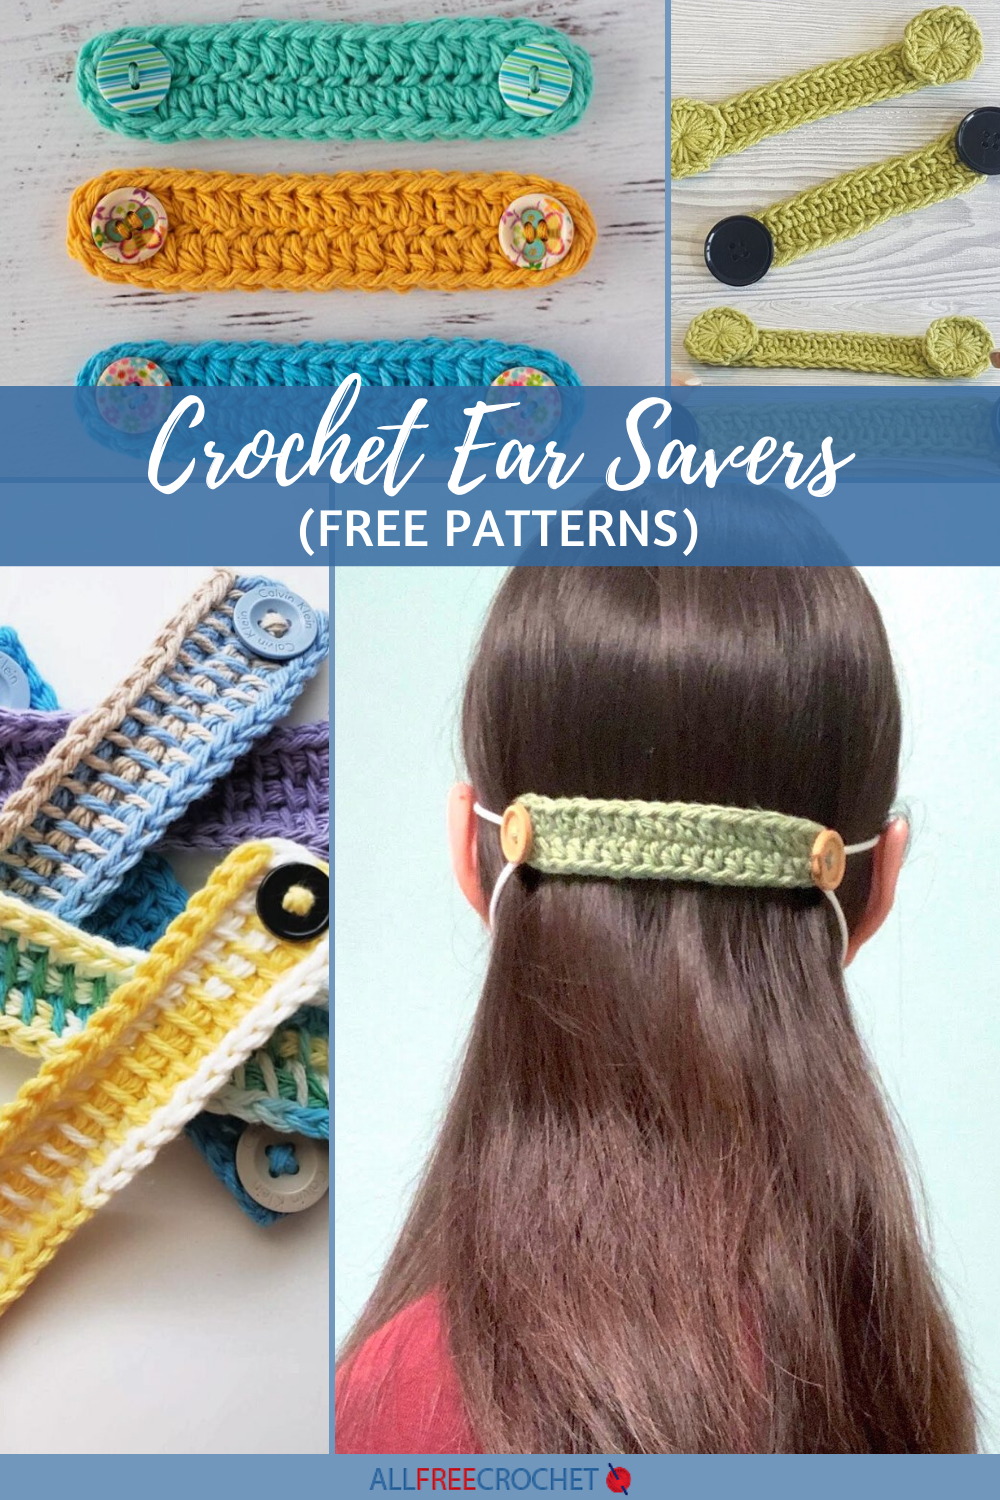 Quick Crochet Ear Savers - Free Pattern on Moogly